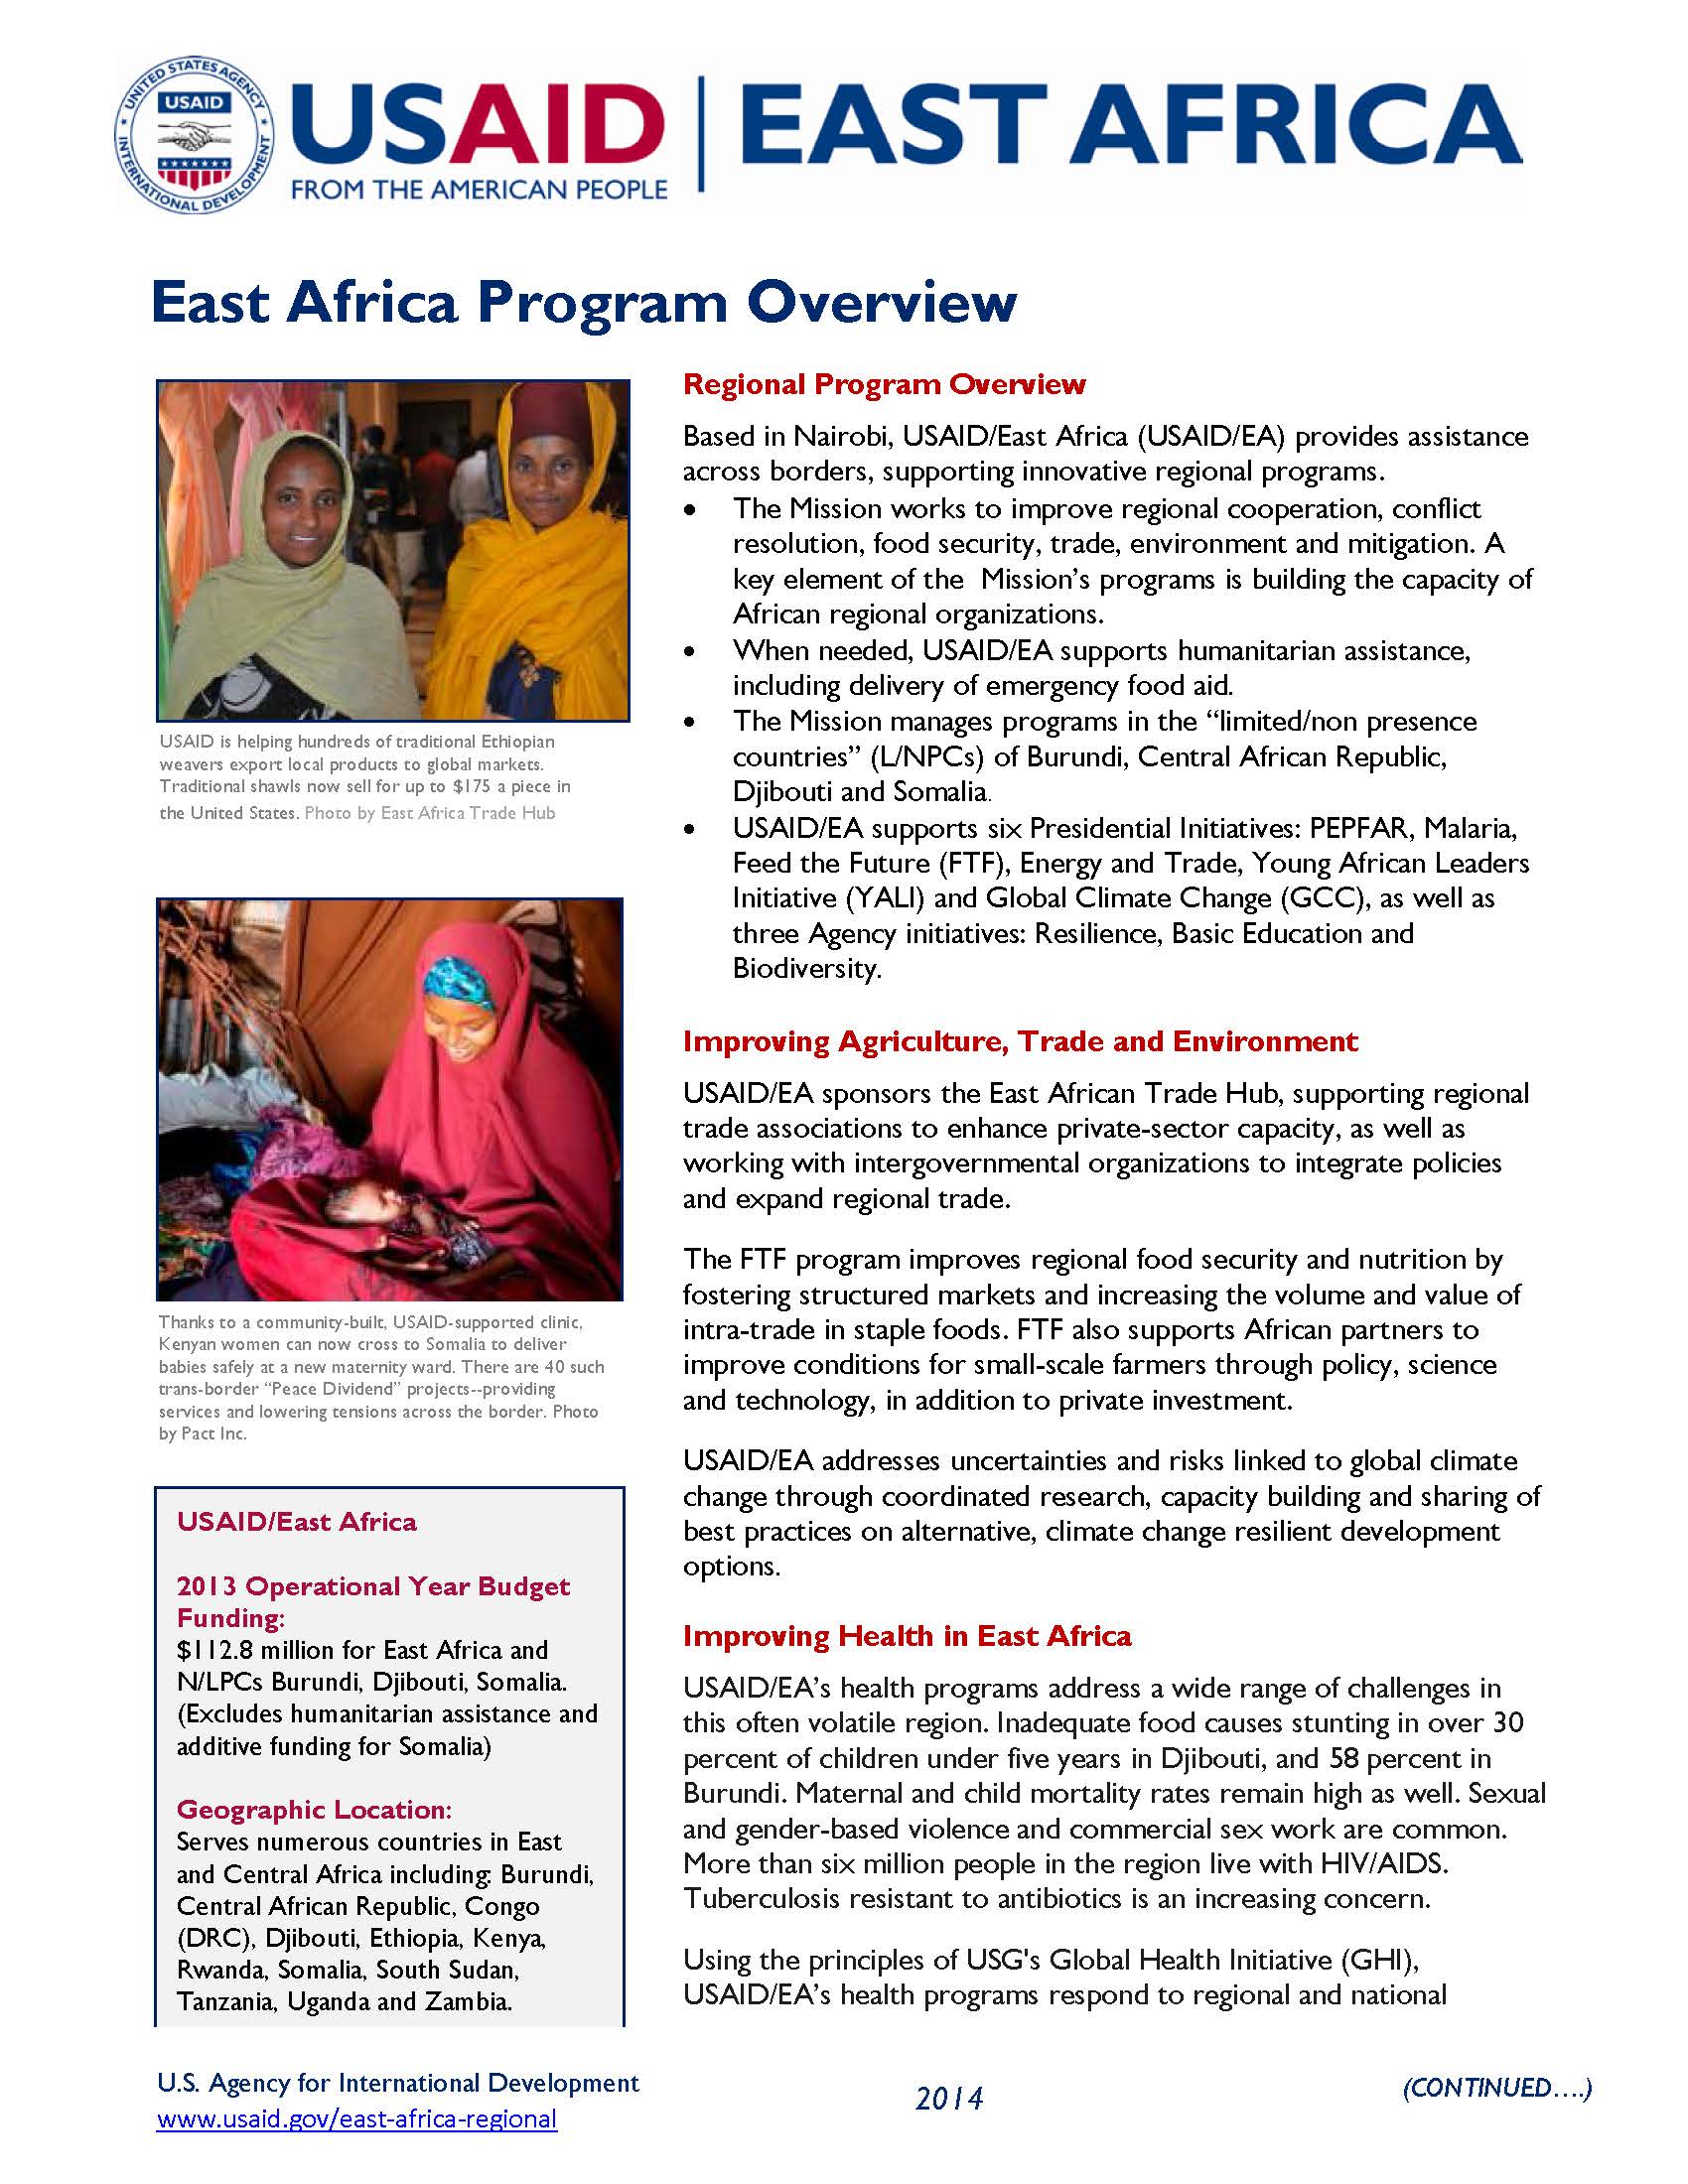 East Africa Program Overview 2014